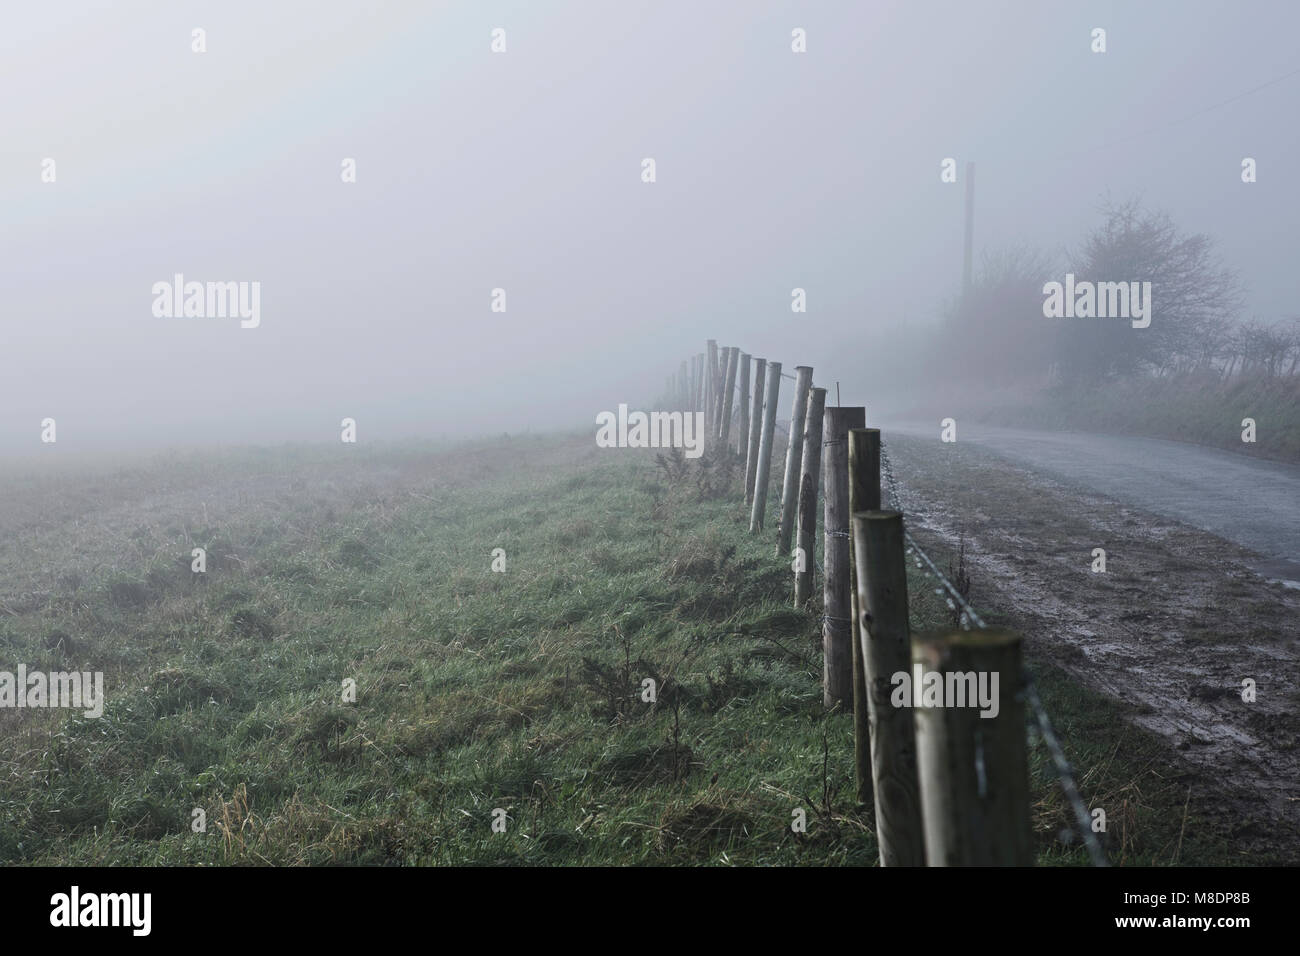 Fence along roadside in rural setting, with mist, Houghton-le-Spring, Sunderland, UK Stock Photo